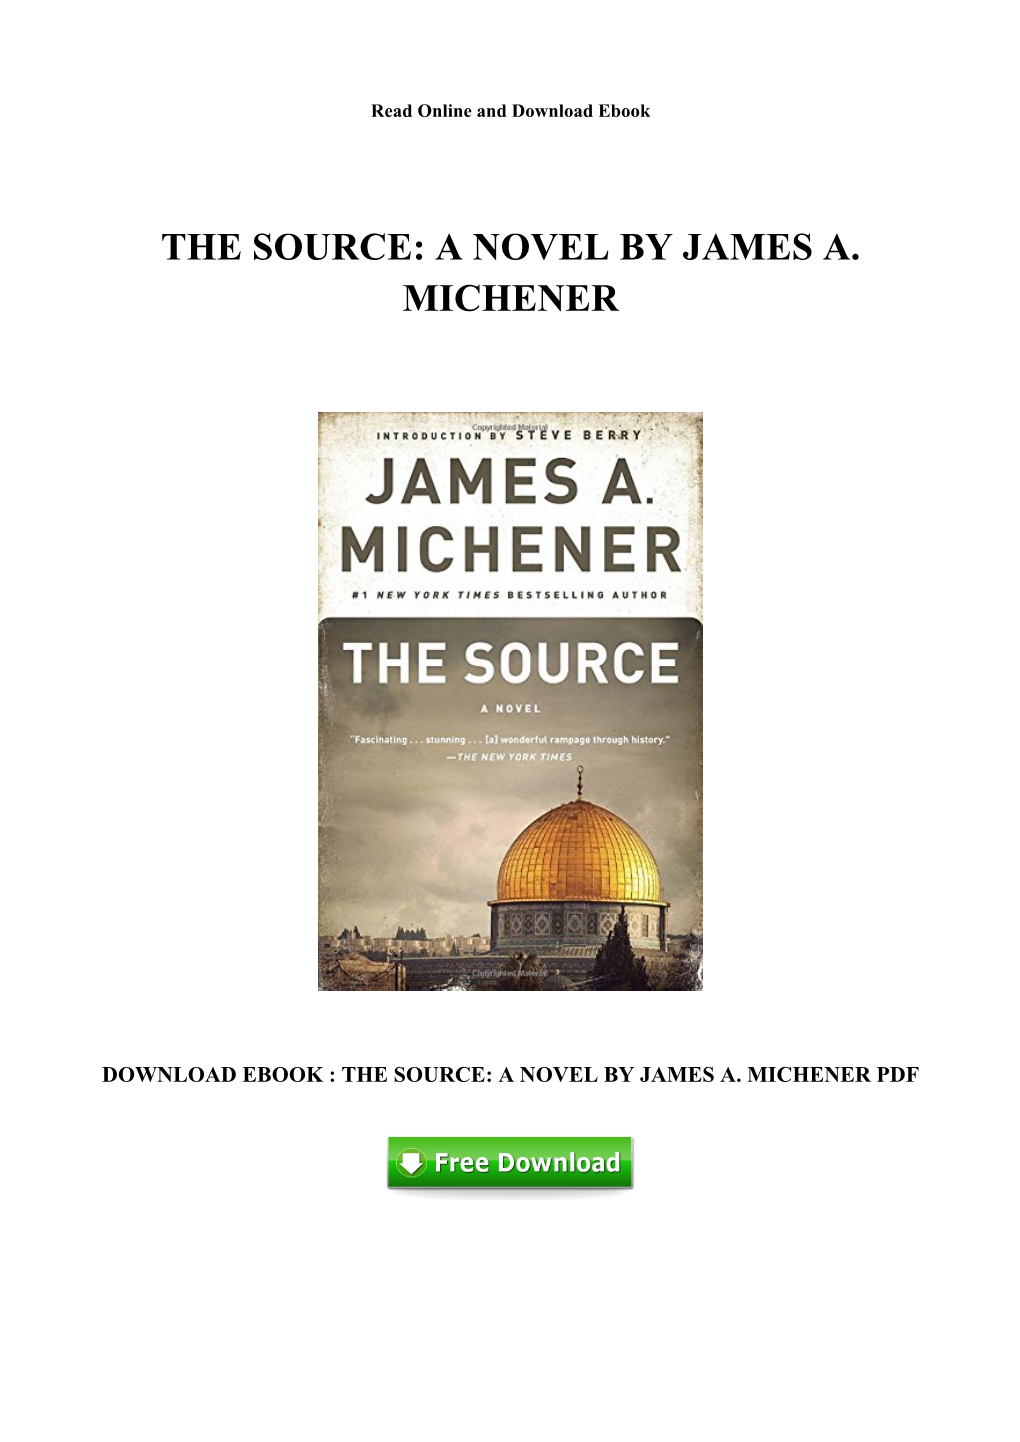 [W716.Ebook] Free PDF the Source: a Novel by James A. Michener